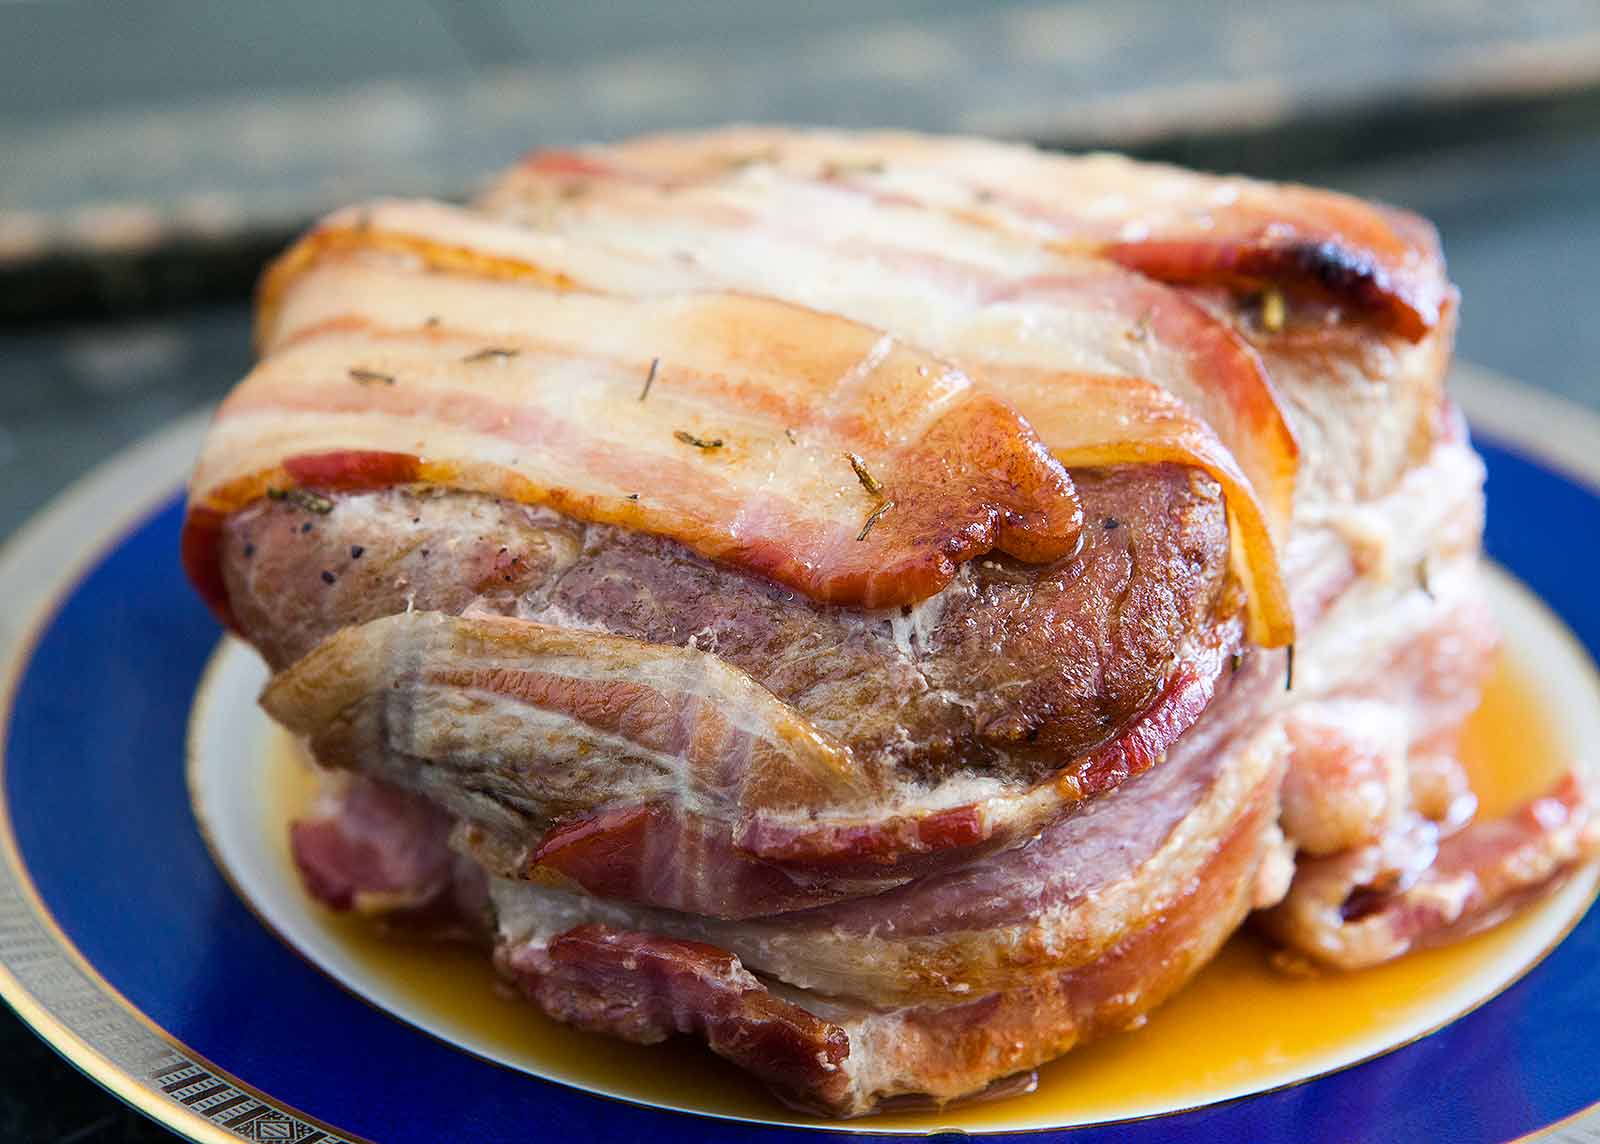 Bacon-wrapped-pork-roast-horiz-a-1600